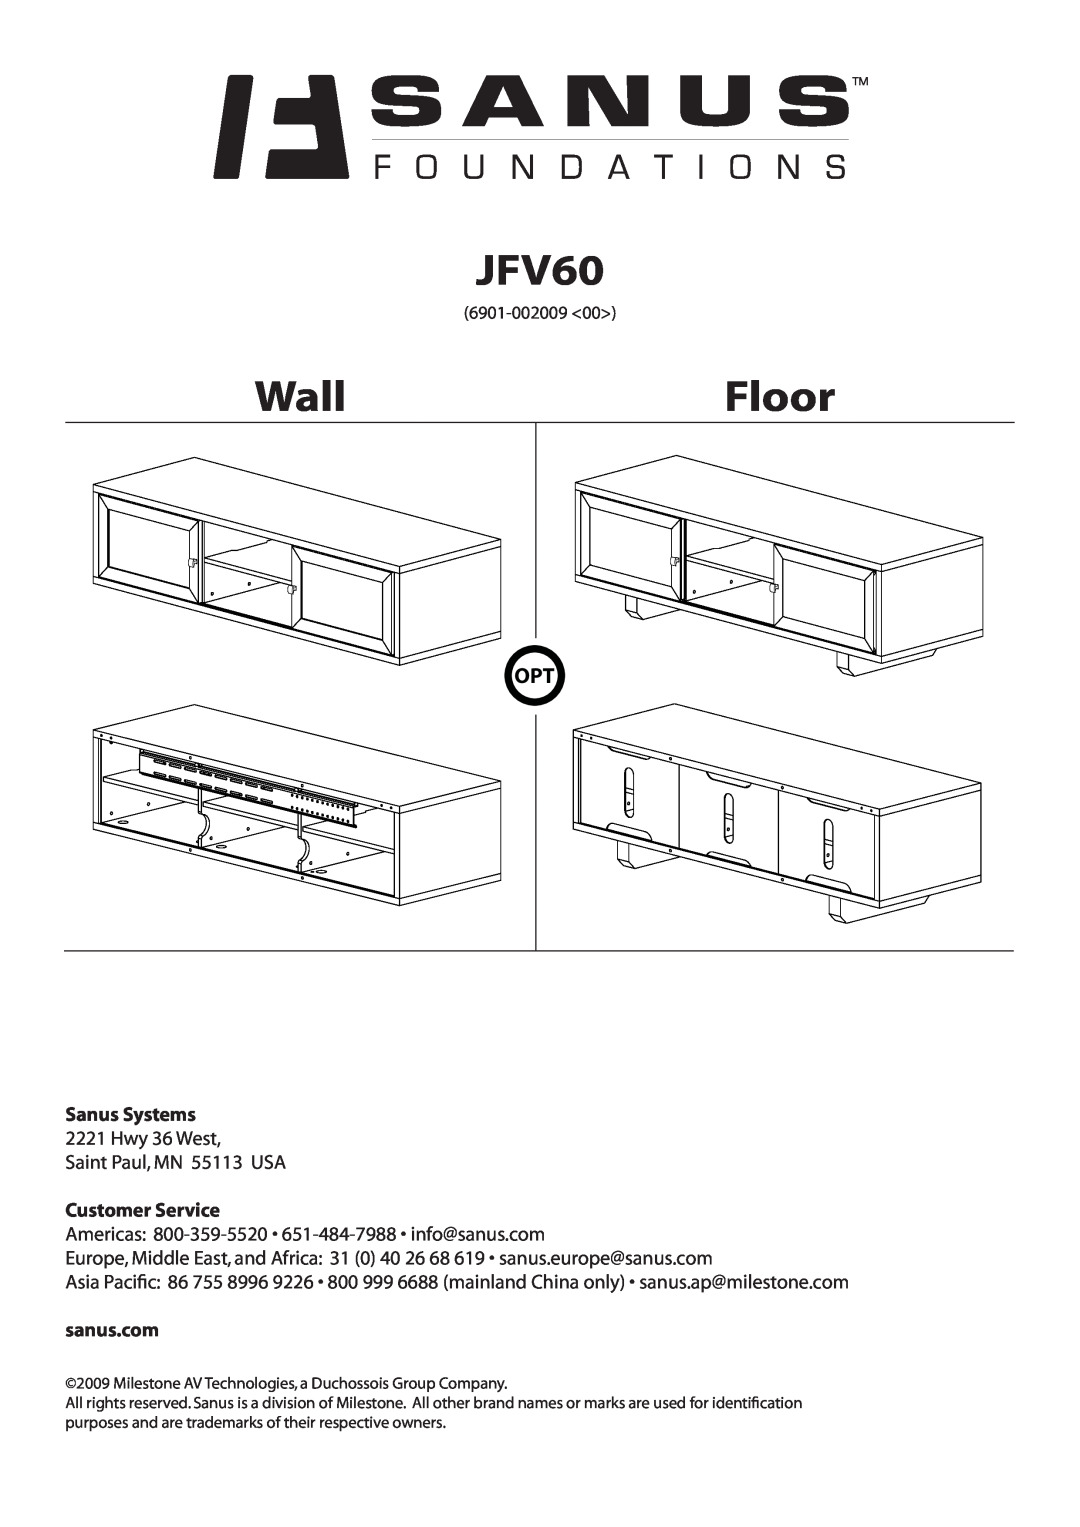 Sanus Systems JFV60 manual Wall, Floor, Sanus Systems, Customer Service, sanus.com 